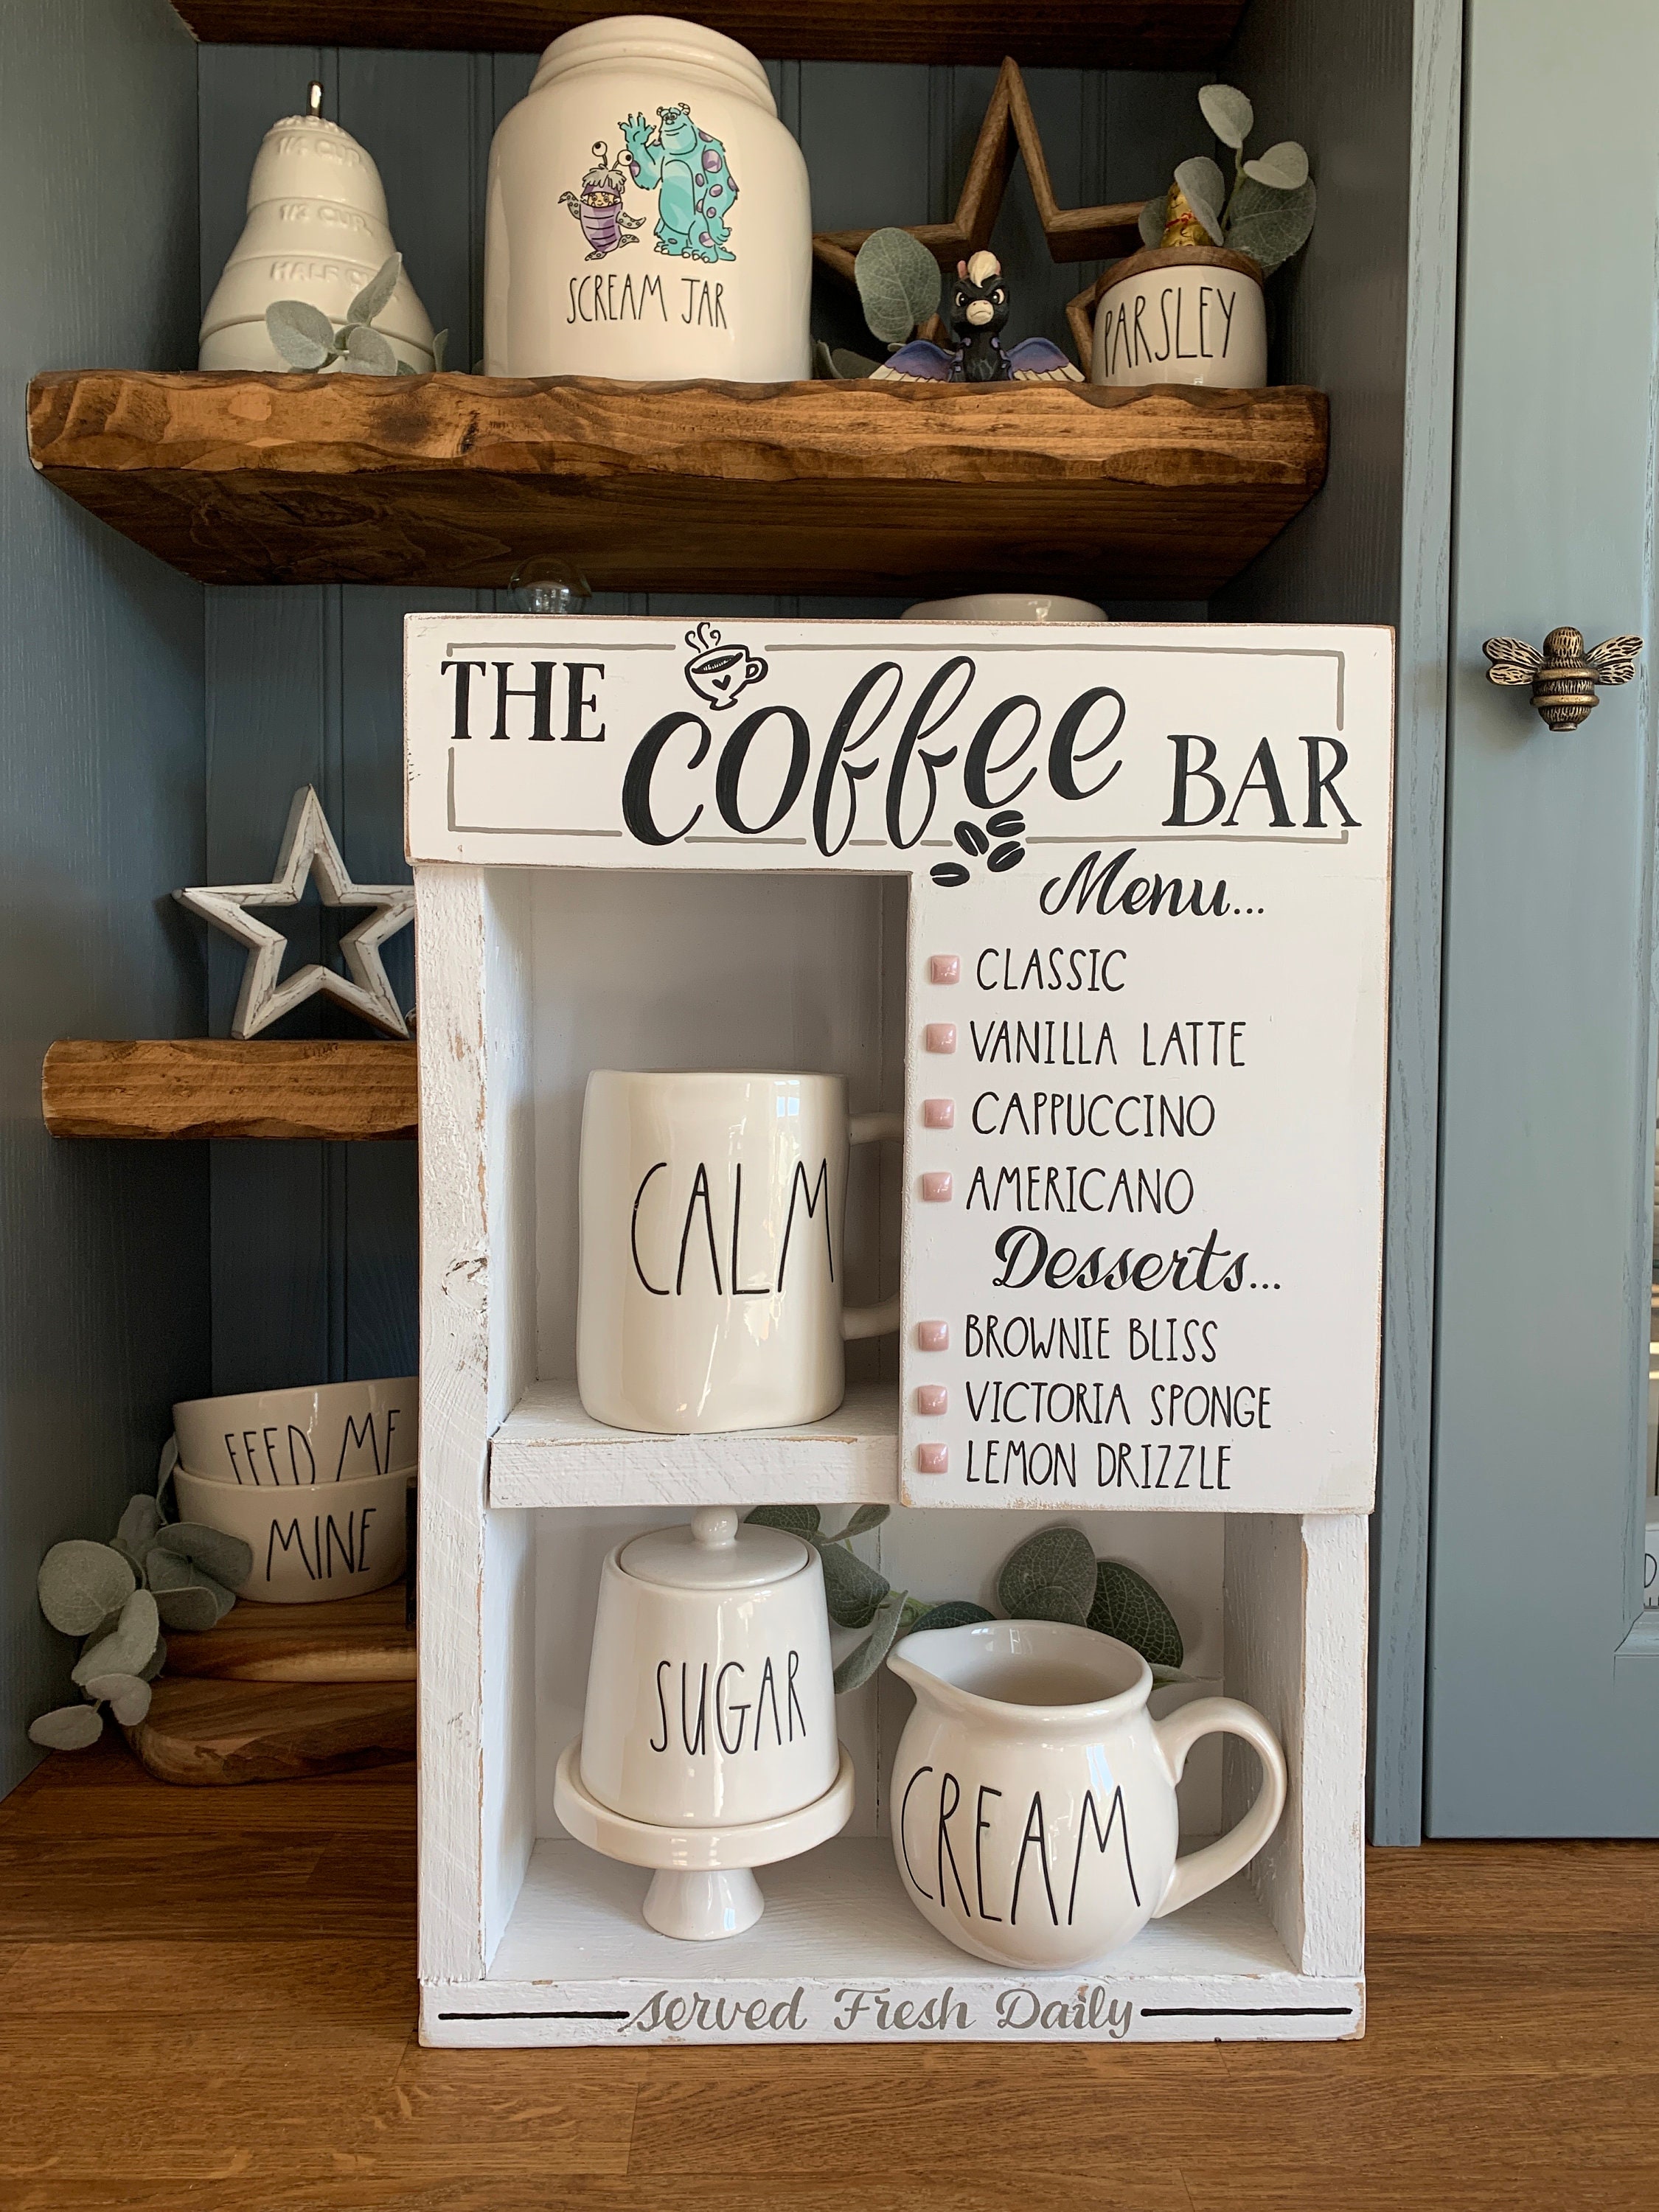 Heavybao Paper Cup Holder Shelf Coffee House Bar Cup Organizer